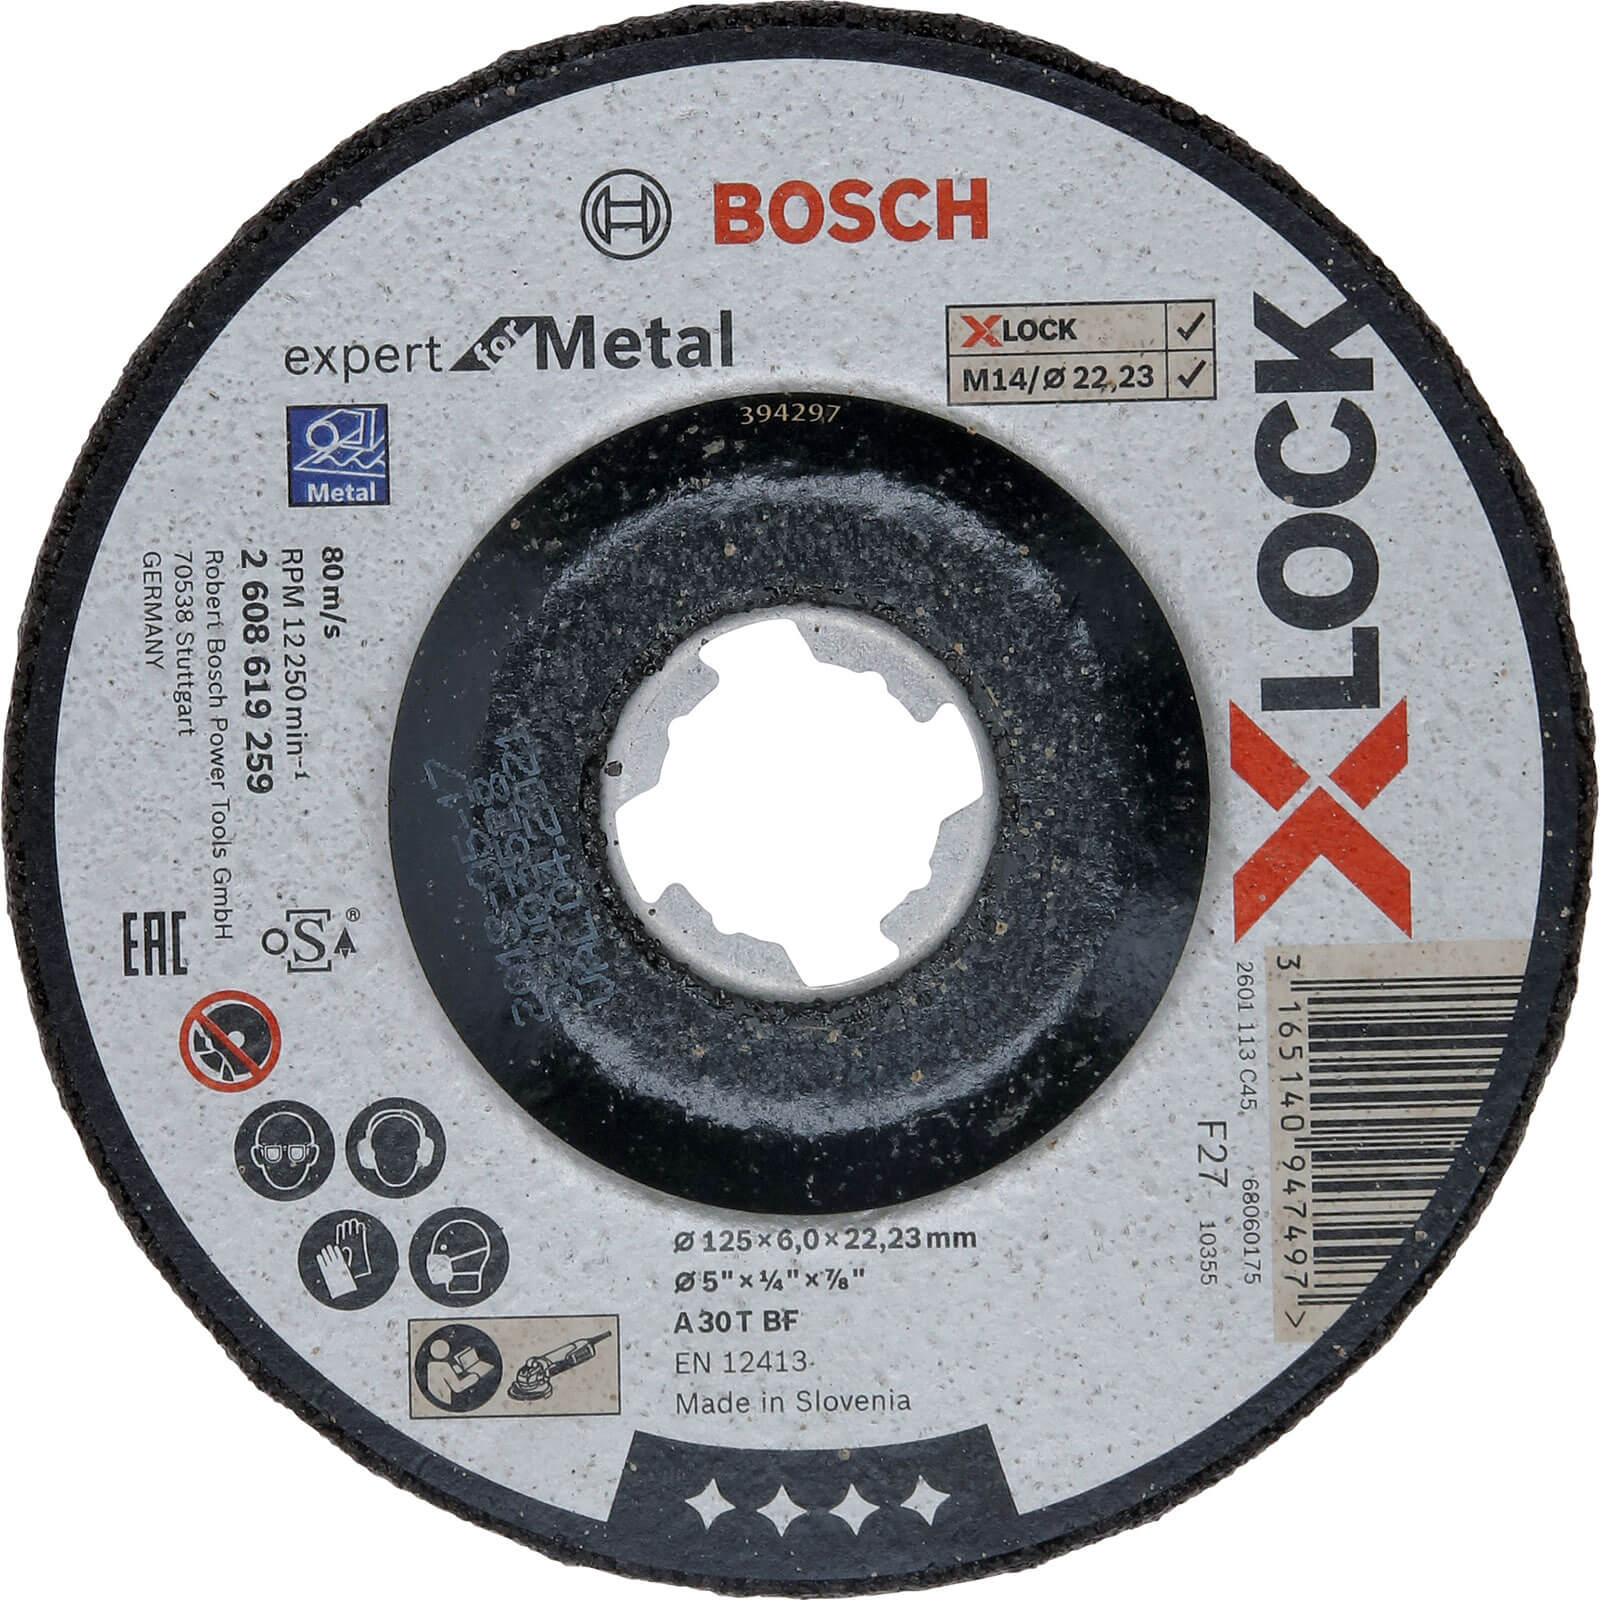 Photos - Cutting Disc Bosch Expert X Lock Depressed Centre Grinding Disc 125mm 6mm 22mm 26086192 